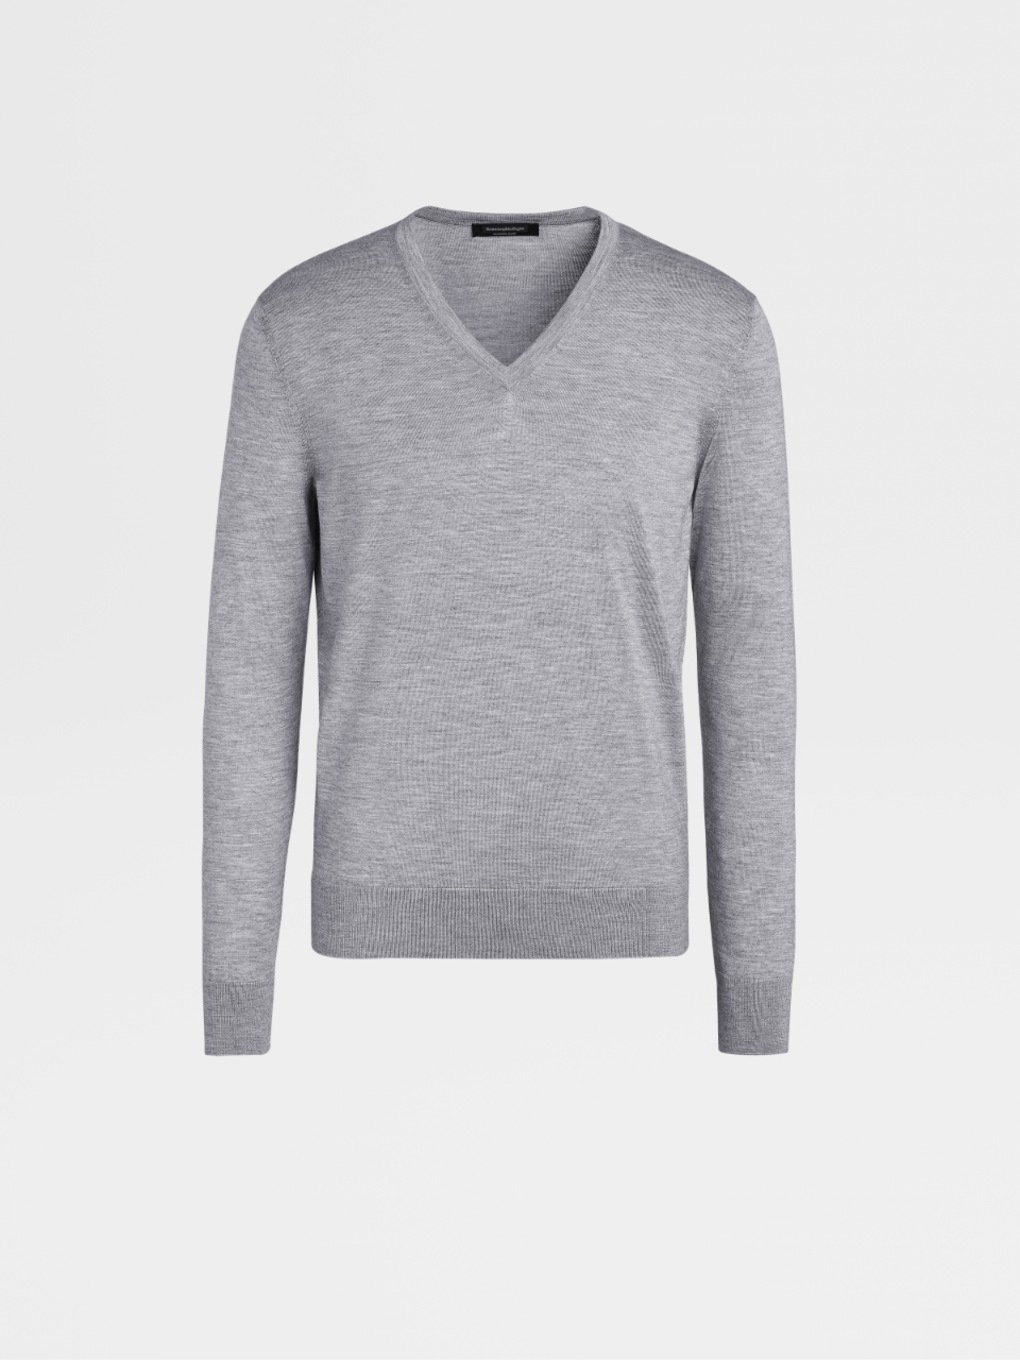 discount 99% Laypun cardigan MEN FASHION Jumpers & Sweatshirts Knitted Gray 56                  EU 